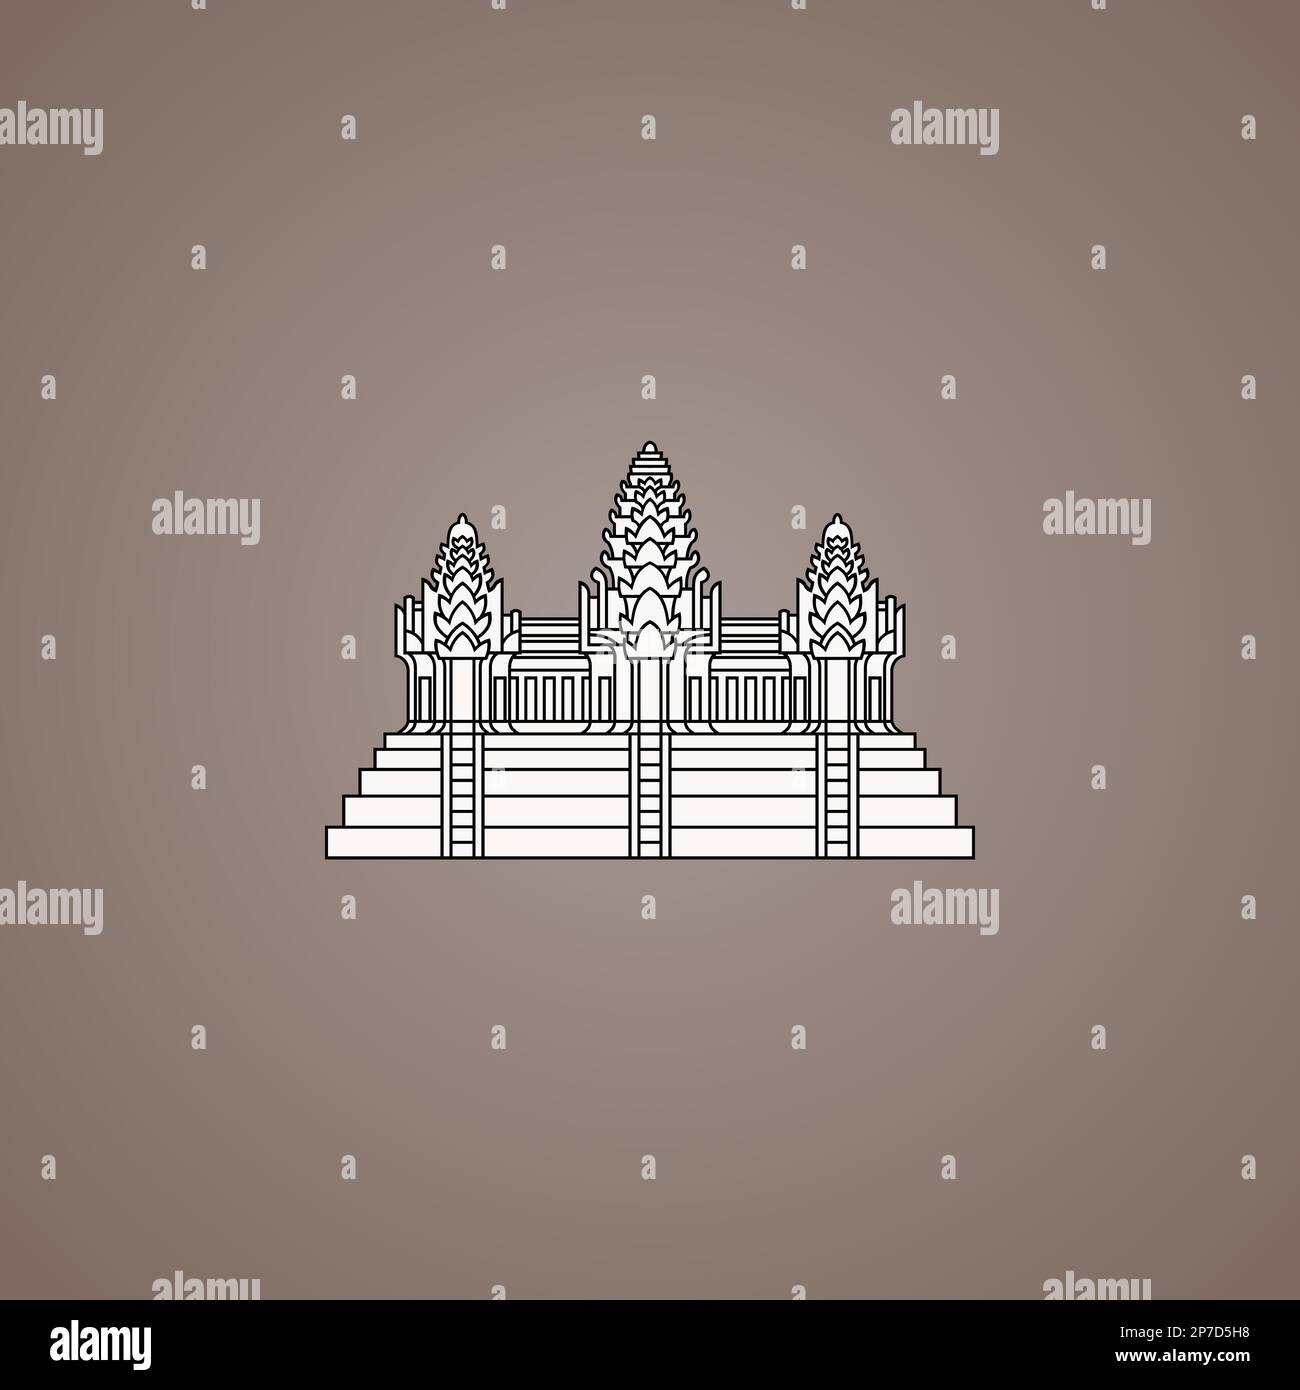 Angkor Wat - symbol from the flag of Cambodia. Stock Vector